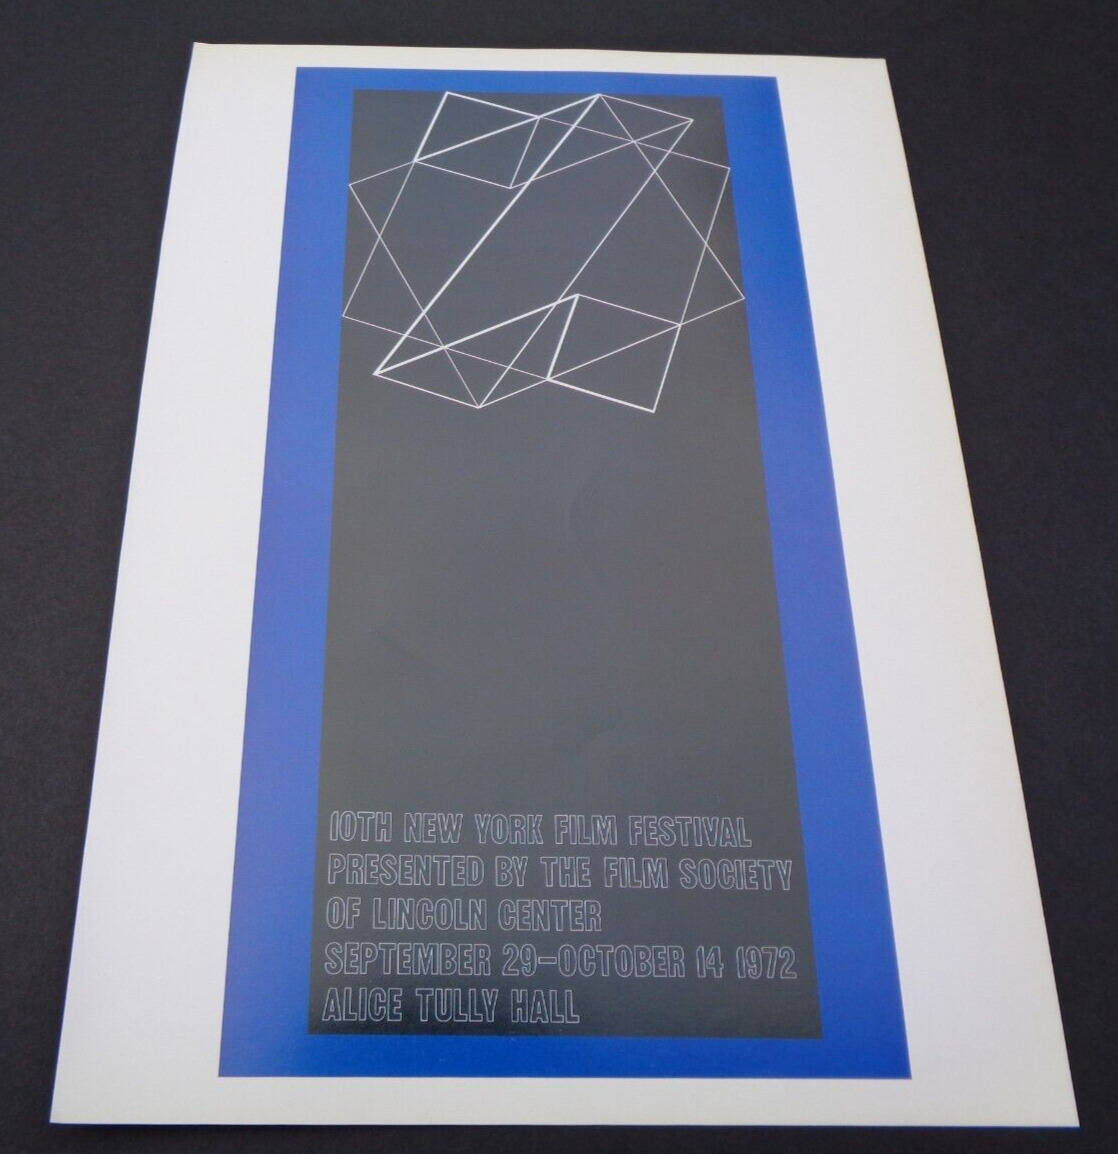 Josef Albers Art 10th New York Film Festival Poster 11x16 Society Lincoln Center